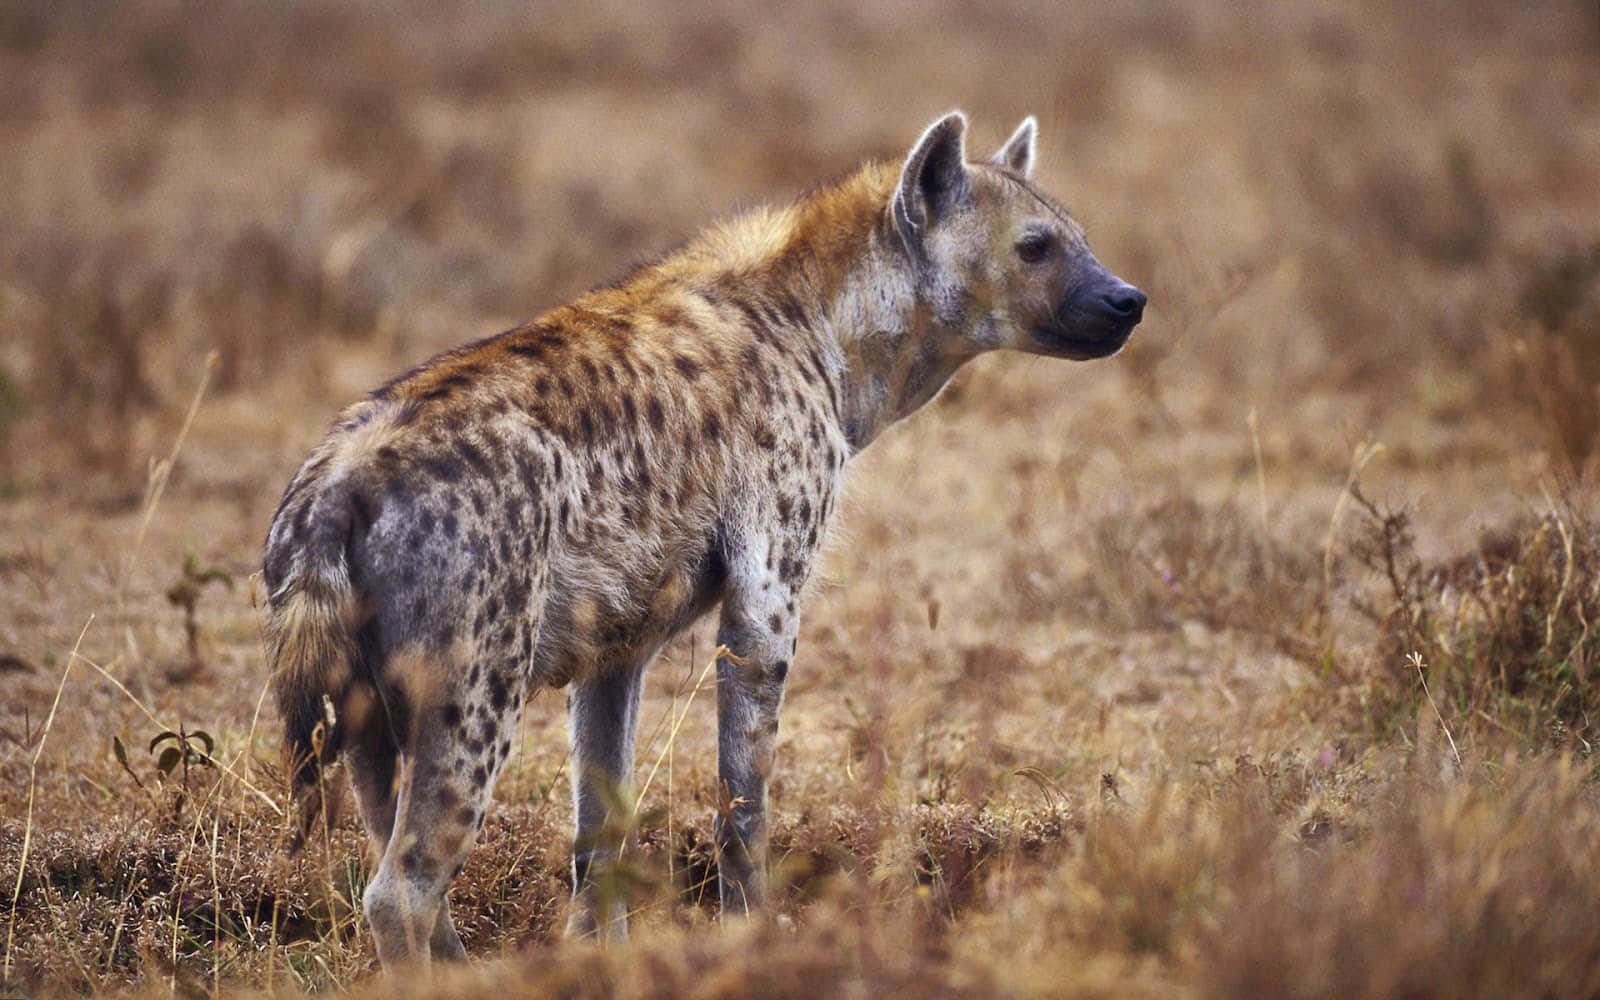 a hyena is standing in a field